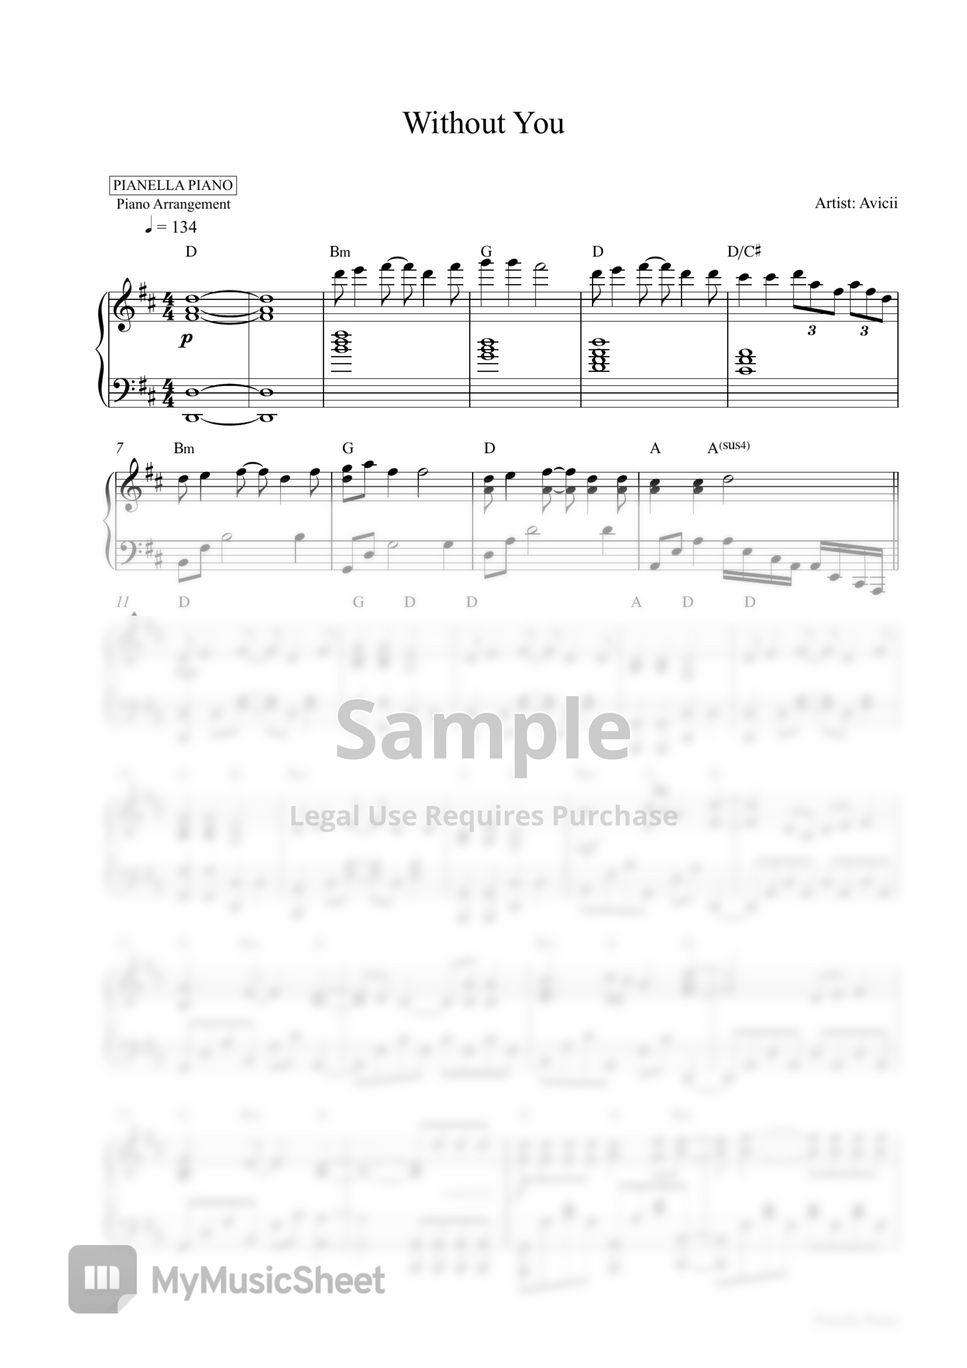 Avicii ft. Sandro Cavazza - Without You (Piano Sheet Music) by Pianella Piano